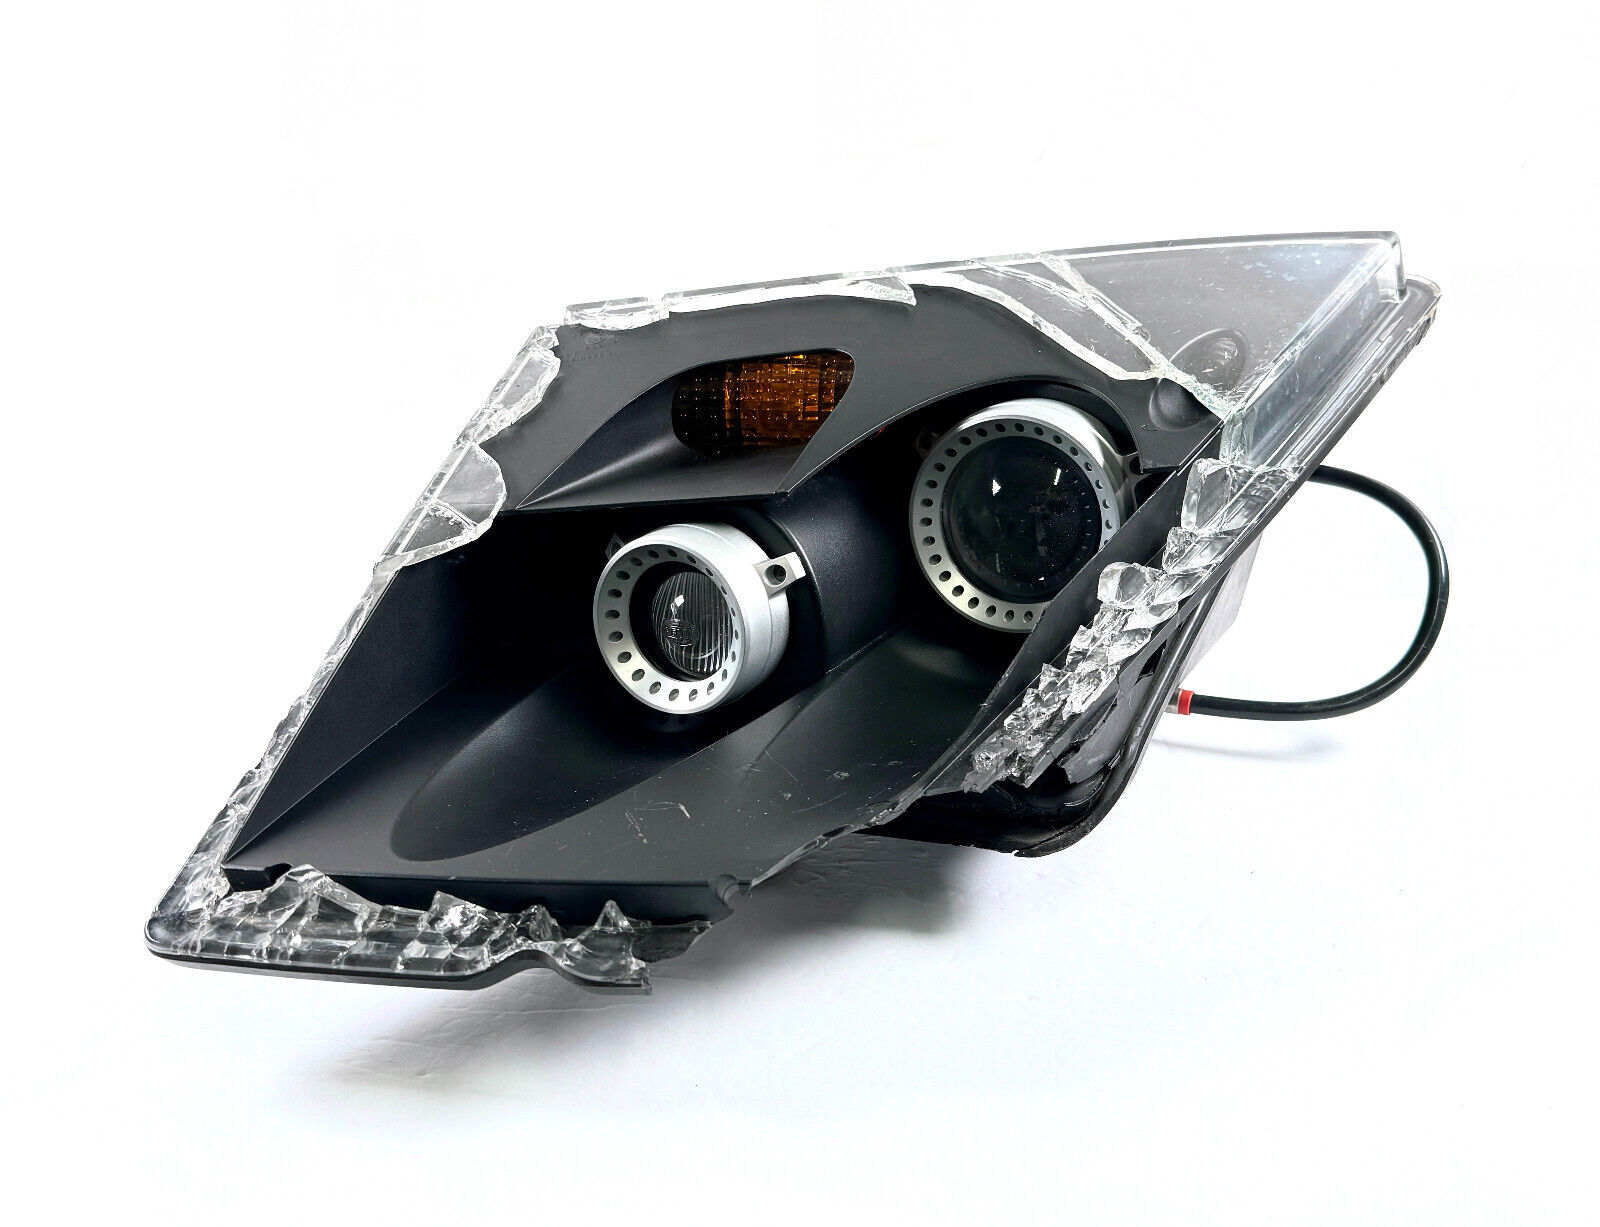 Lamborghini Murcielago Drivers/Left side Headlight w/Hella Projector (DAMAGED)